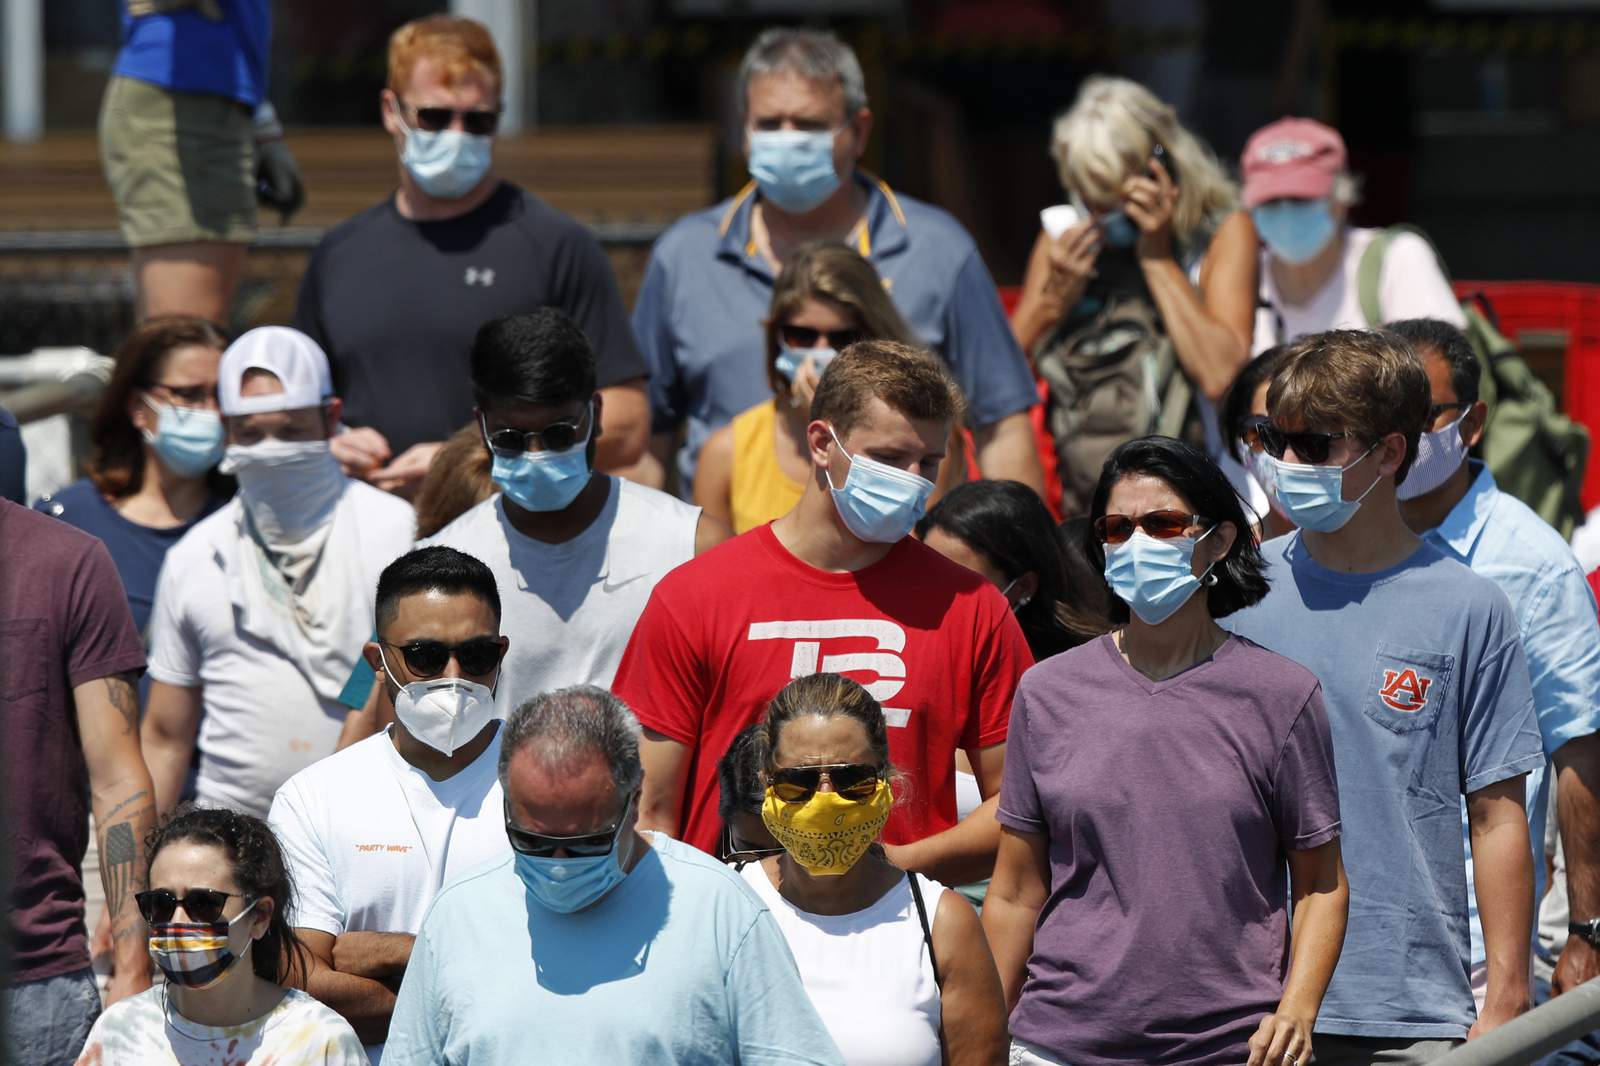 2nd US virus surge hits plateau, but few experts celebrate